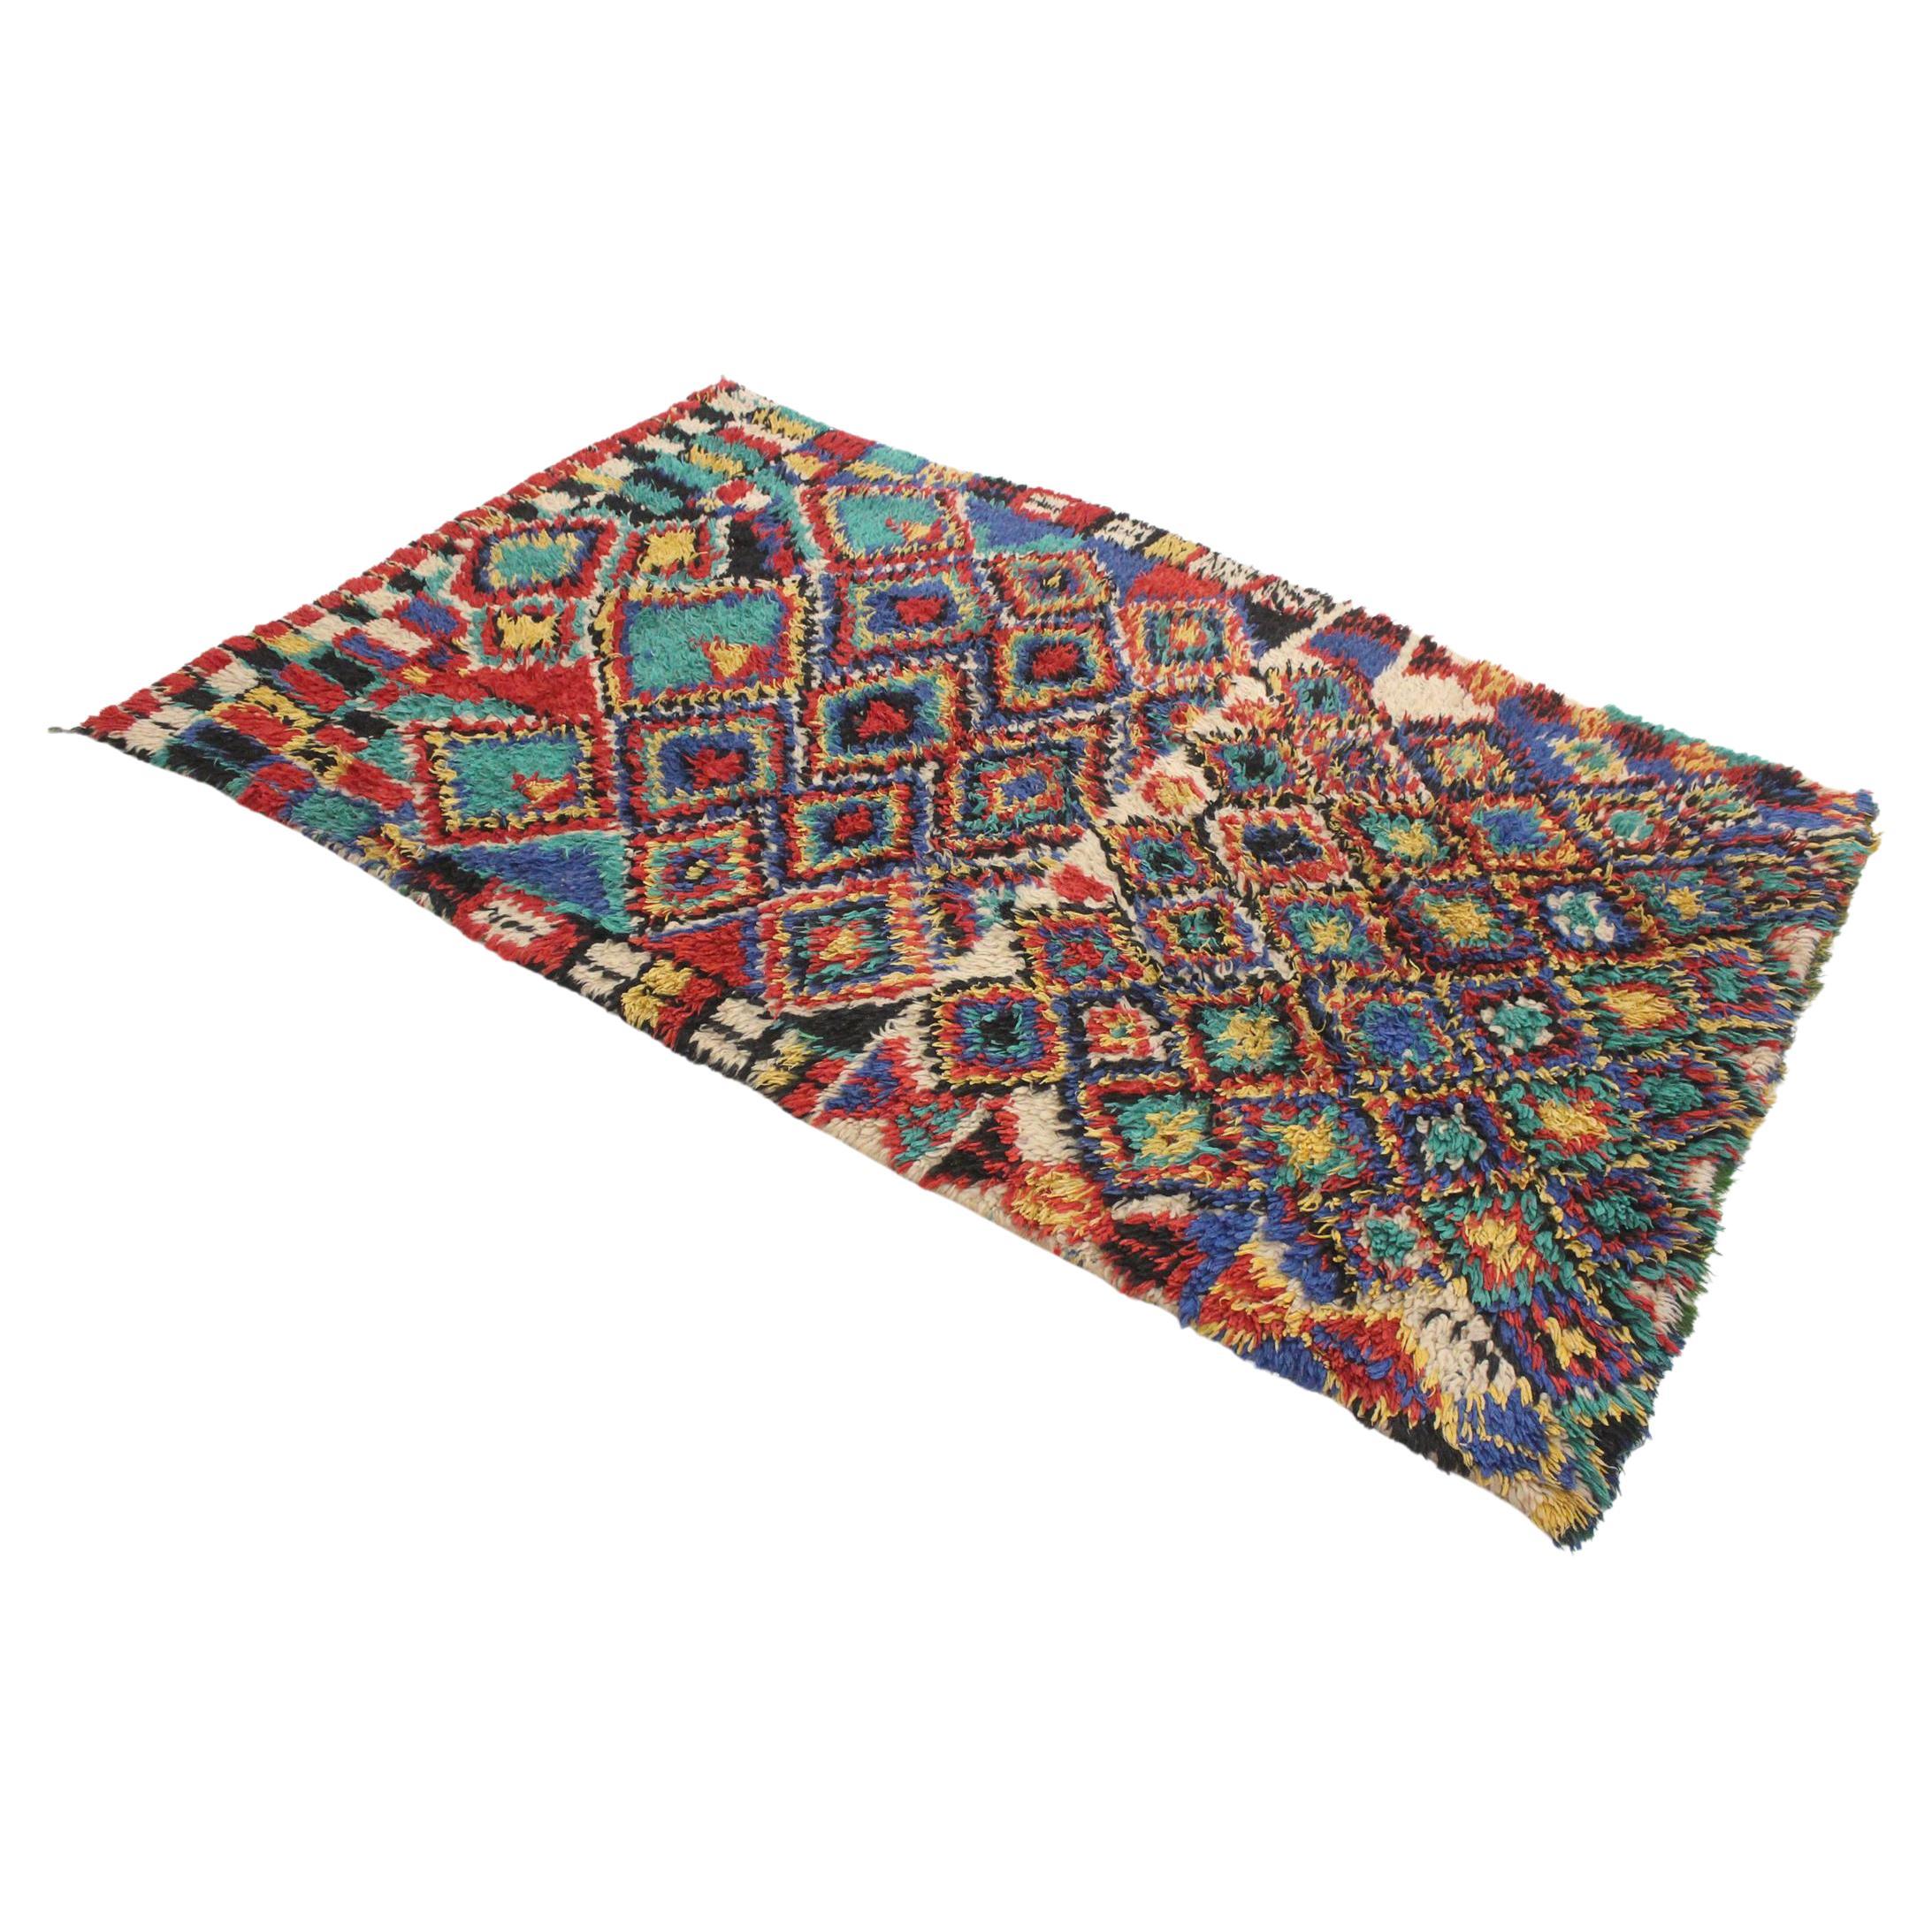 Marokkanischer Azilal-Teppich im Vintage-Stil - Blau/rot/grün - 4.1x6,5feet / 125x200cm